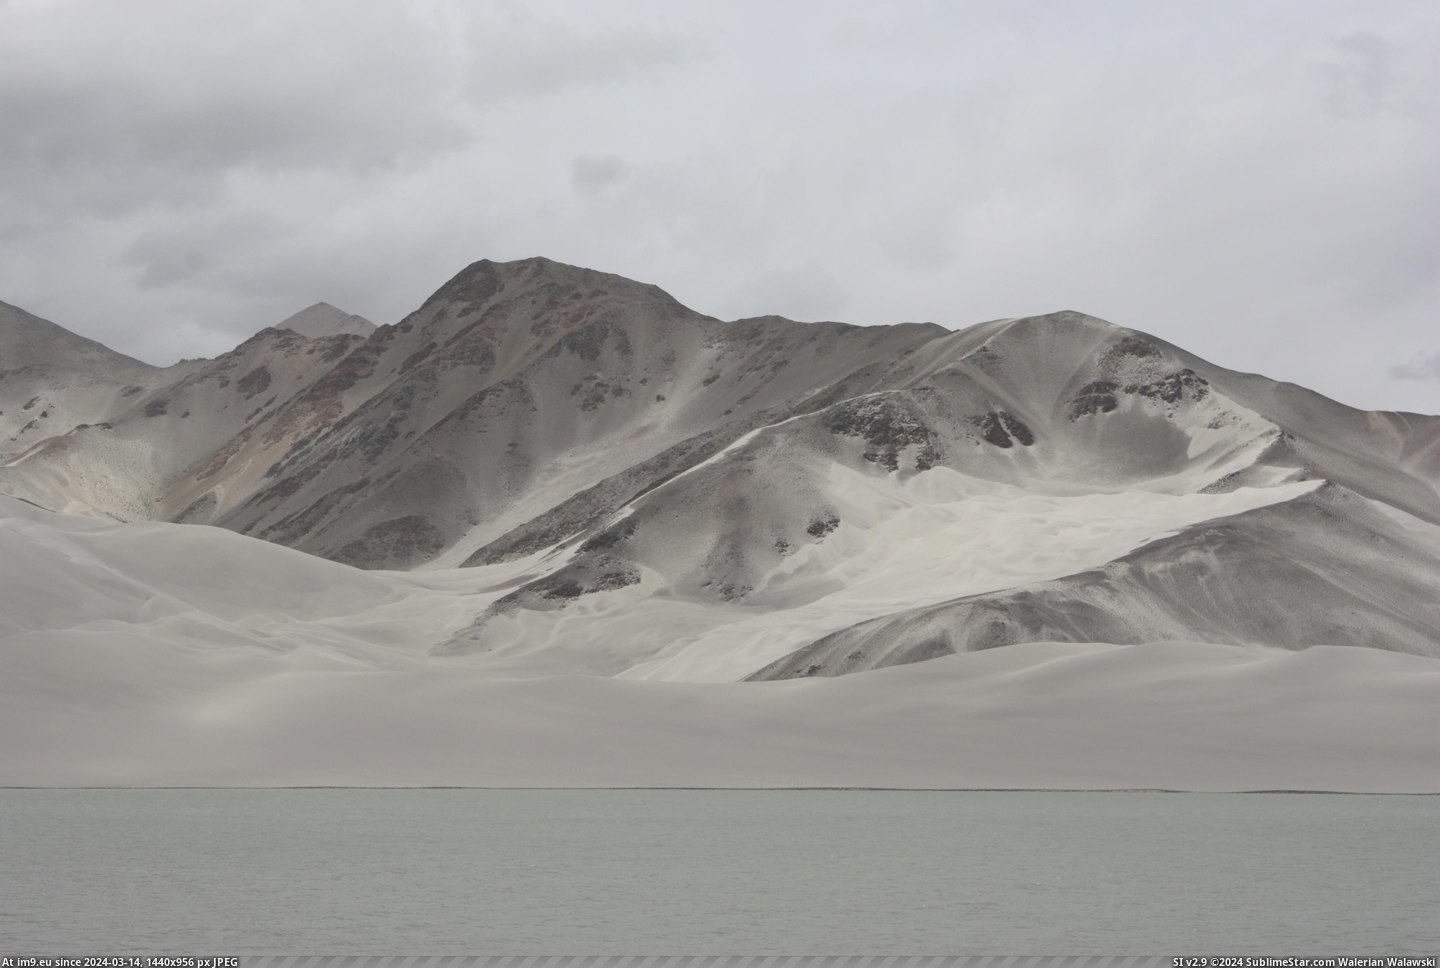 #White #Mountain #Province #4272x2848 #Xinjiang #China #Sand [Earthporn] [OC] White Sand mountain - Xinjiang Province, China [4272x2848] Pic. (Obraz z album My r/EARTHPORN favs))